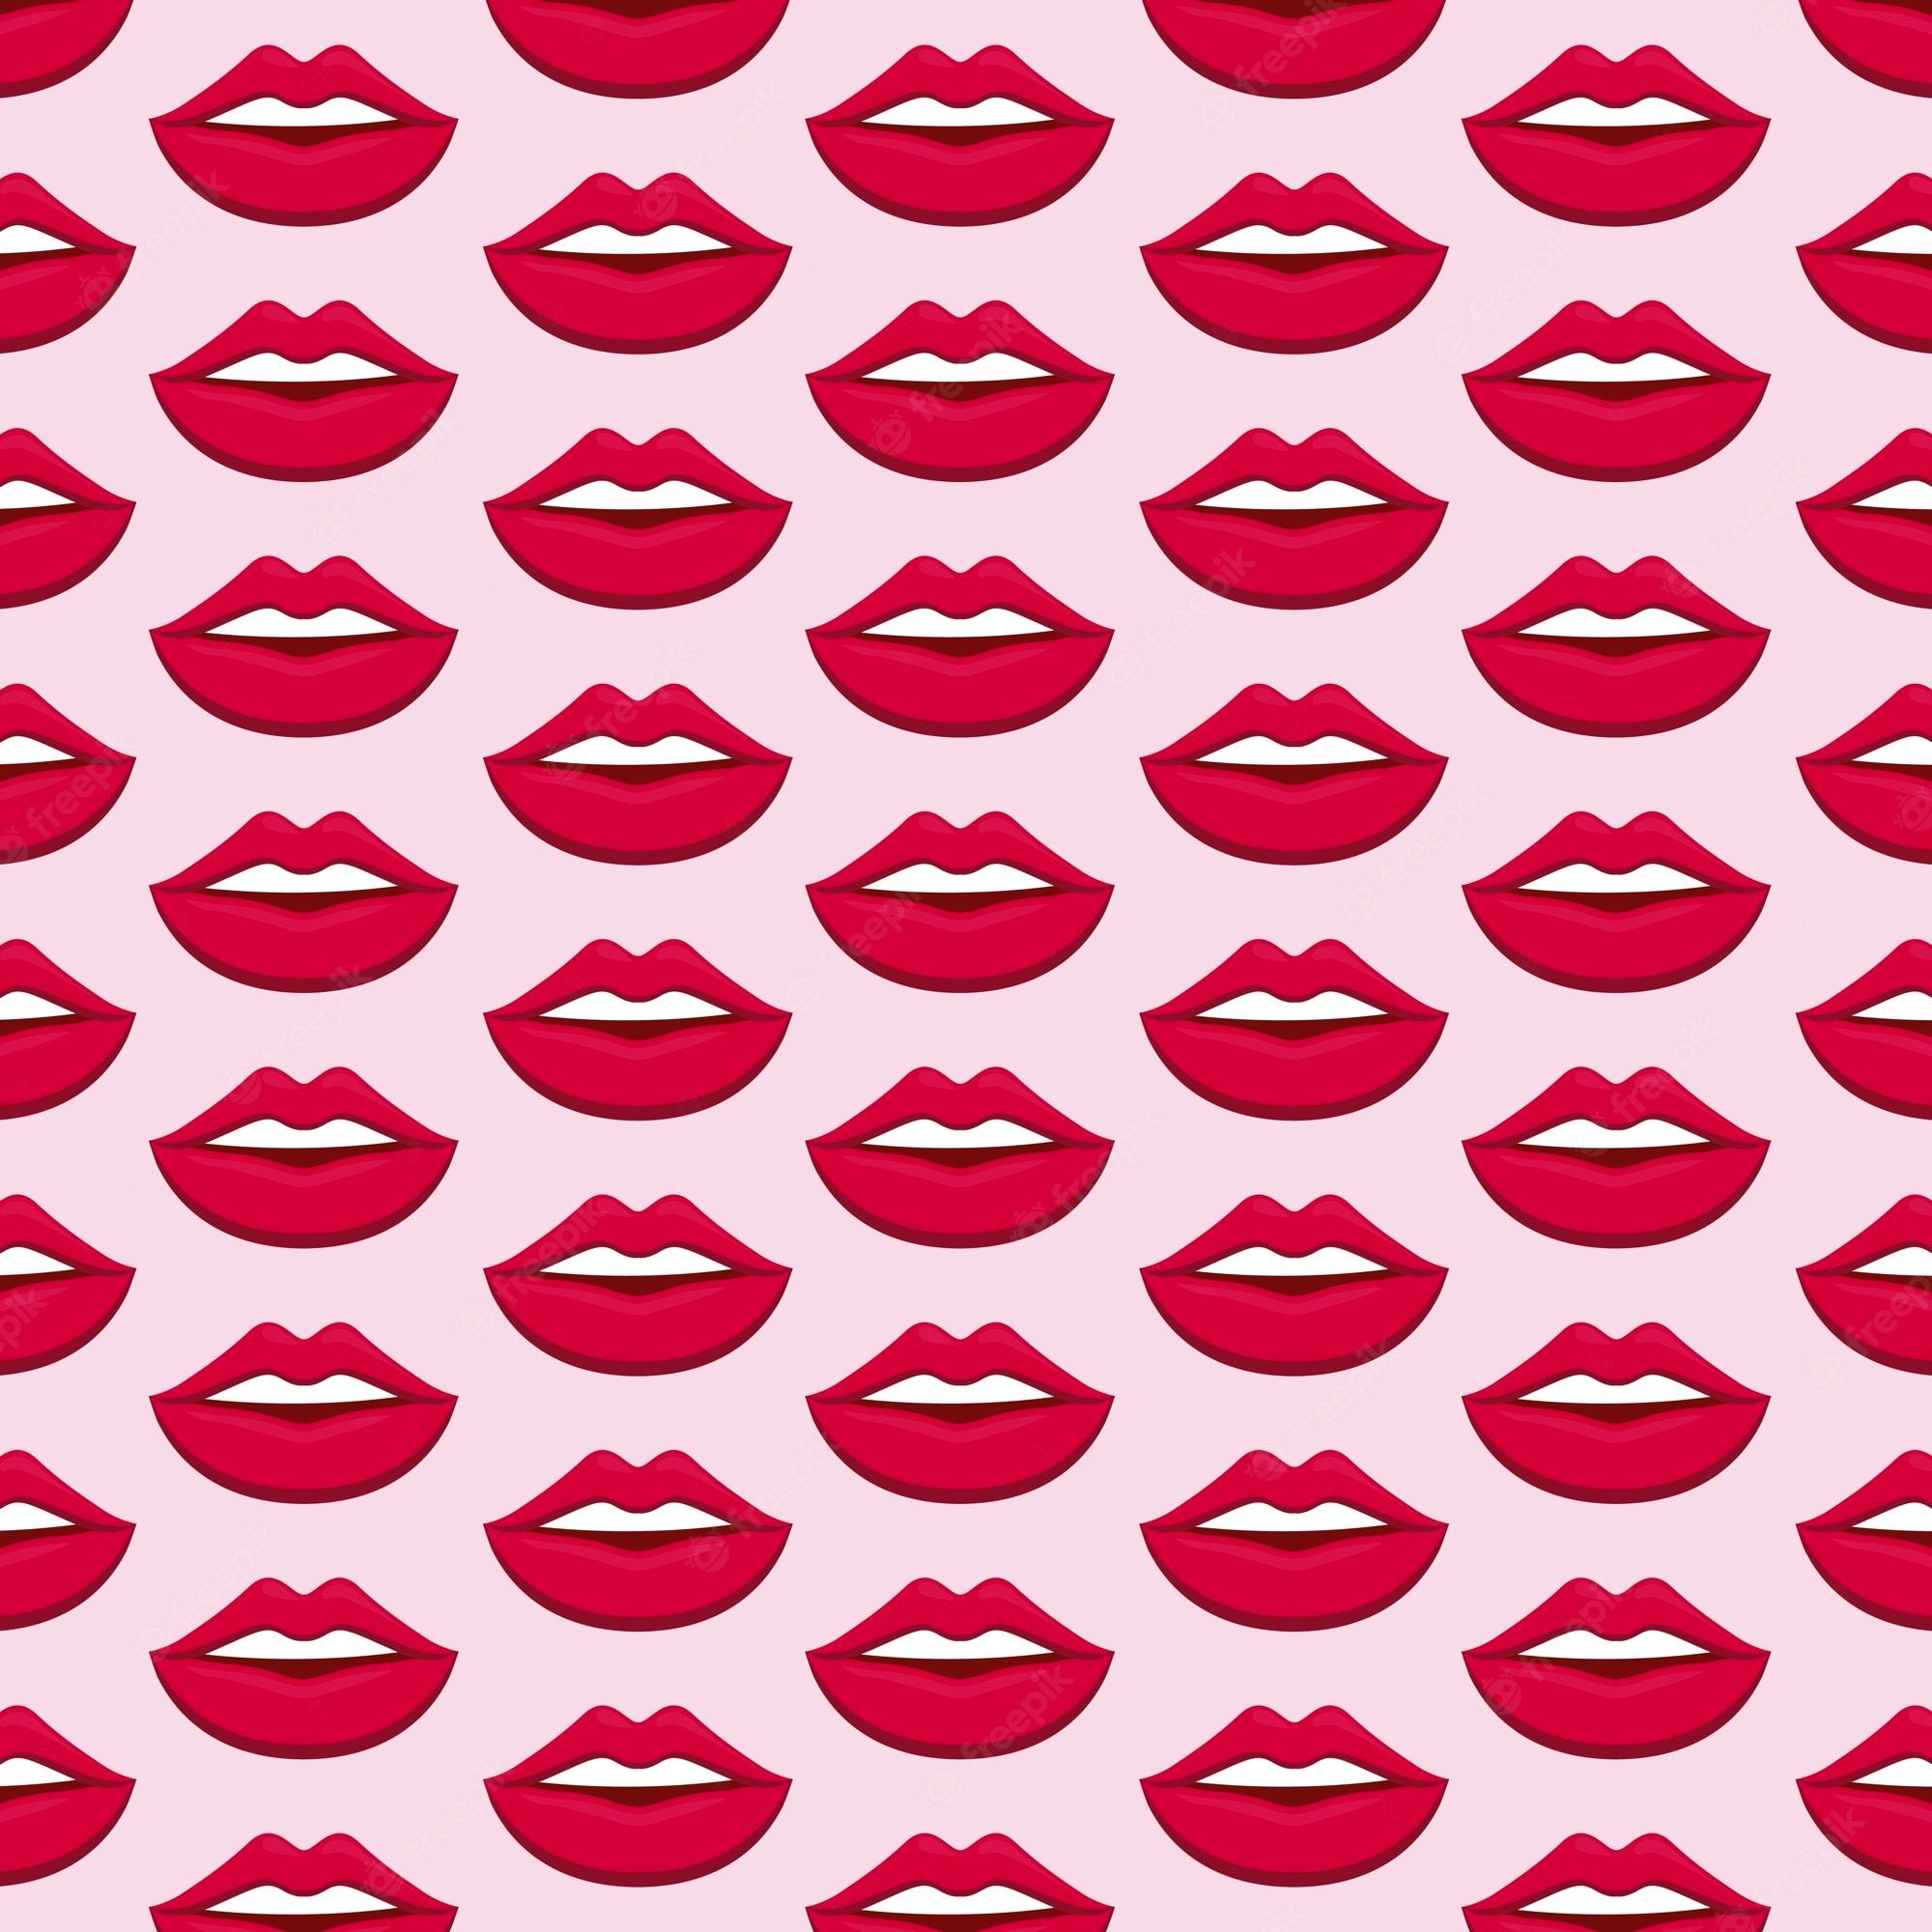 Lips Wallpaper Image